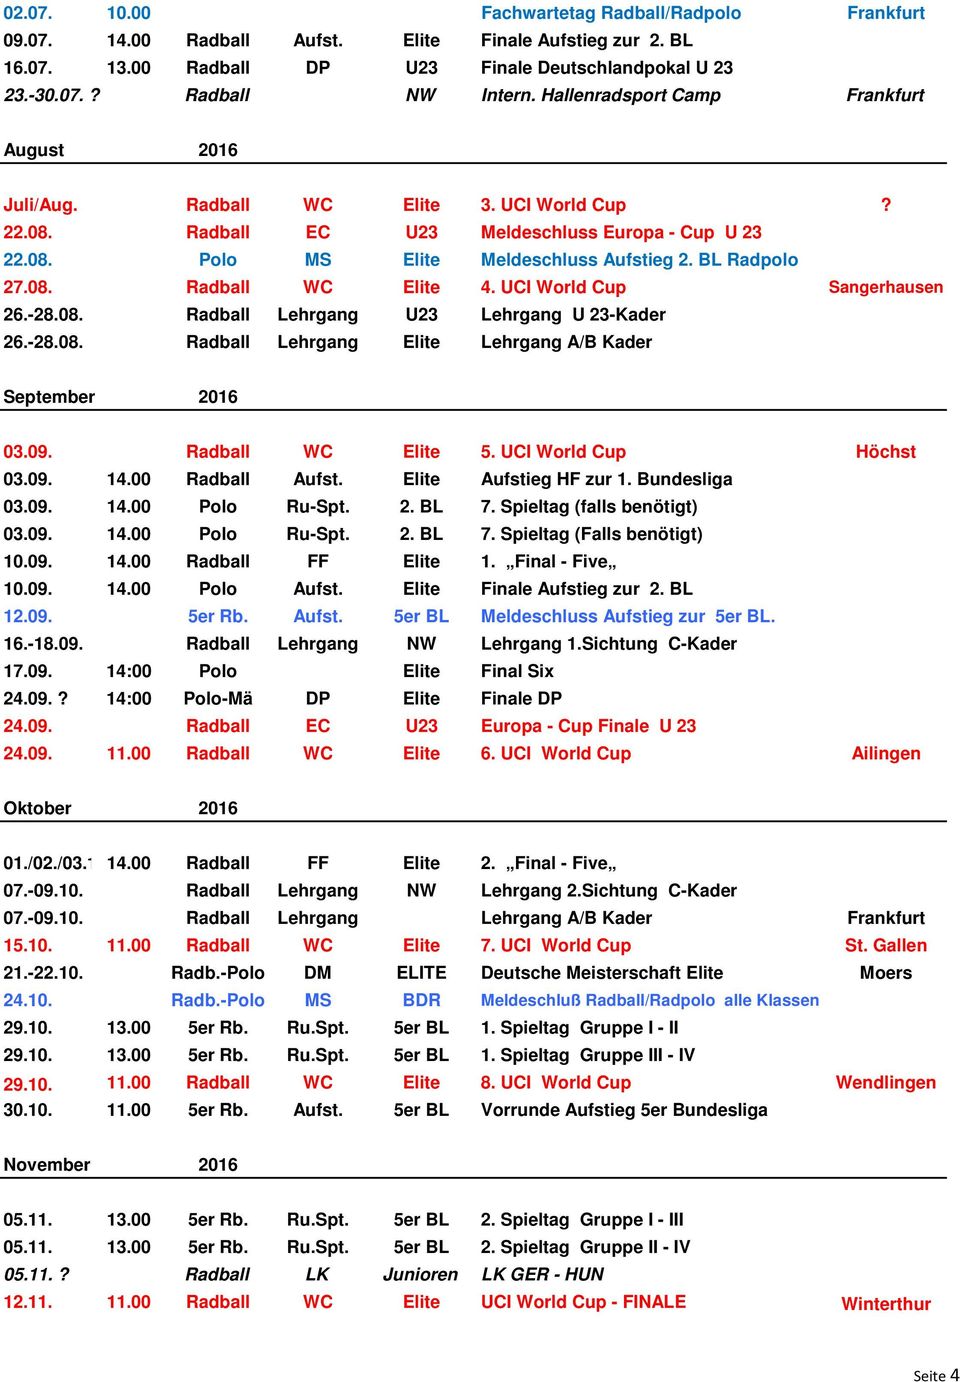 08. Radball WC Elite 4. UCI World Cup Sangerhausen 26.-28.08. Radball Lehrgang U23 Lehrgang U 23-Kader 26.-28.08. Radball Lehrgang Elite Lehrgang A/B Kader September 2016 03.09. Radball WC Elite 5.